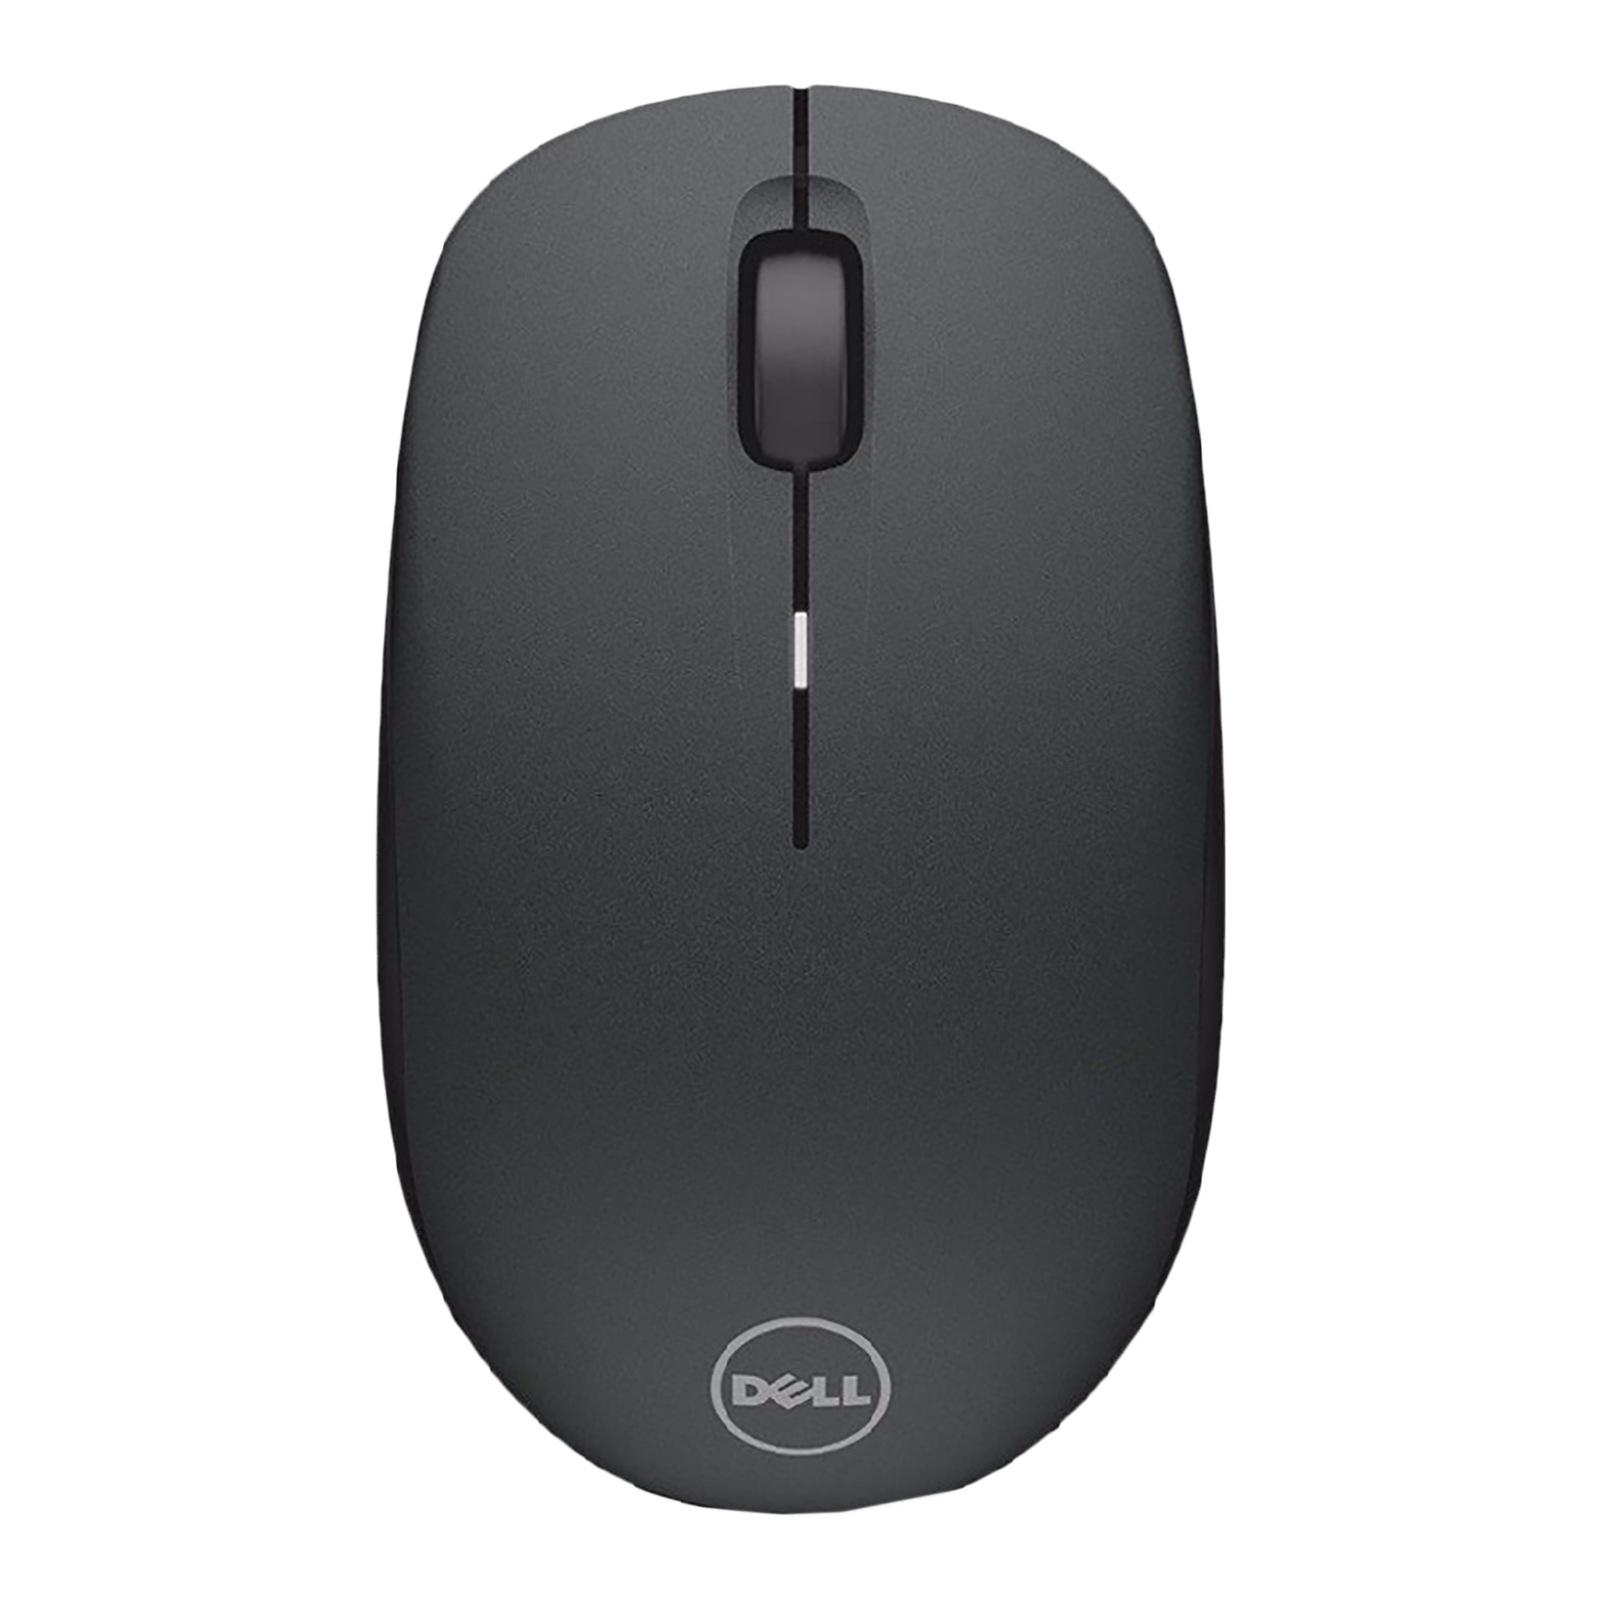 Dell WM126 Wireless Optical Performance Mouse (1000 dpi, Comfortable Design, Black)